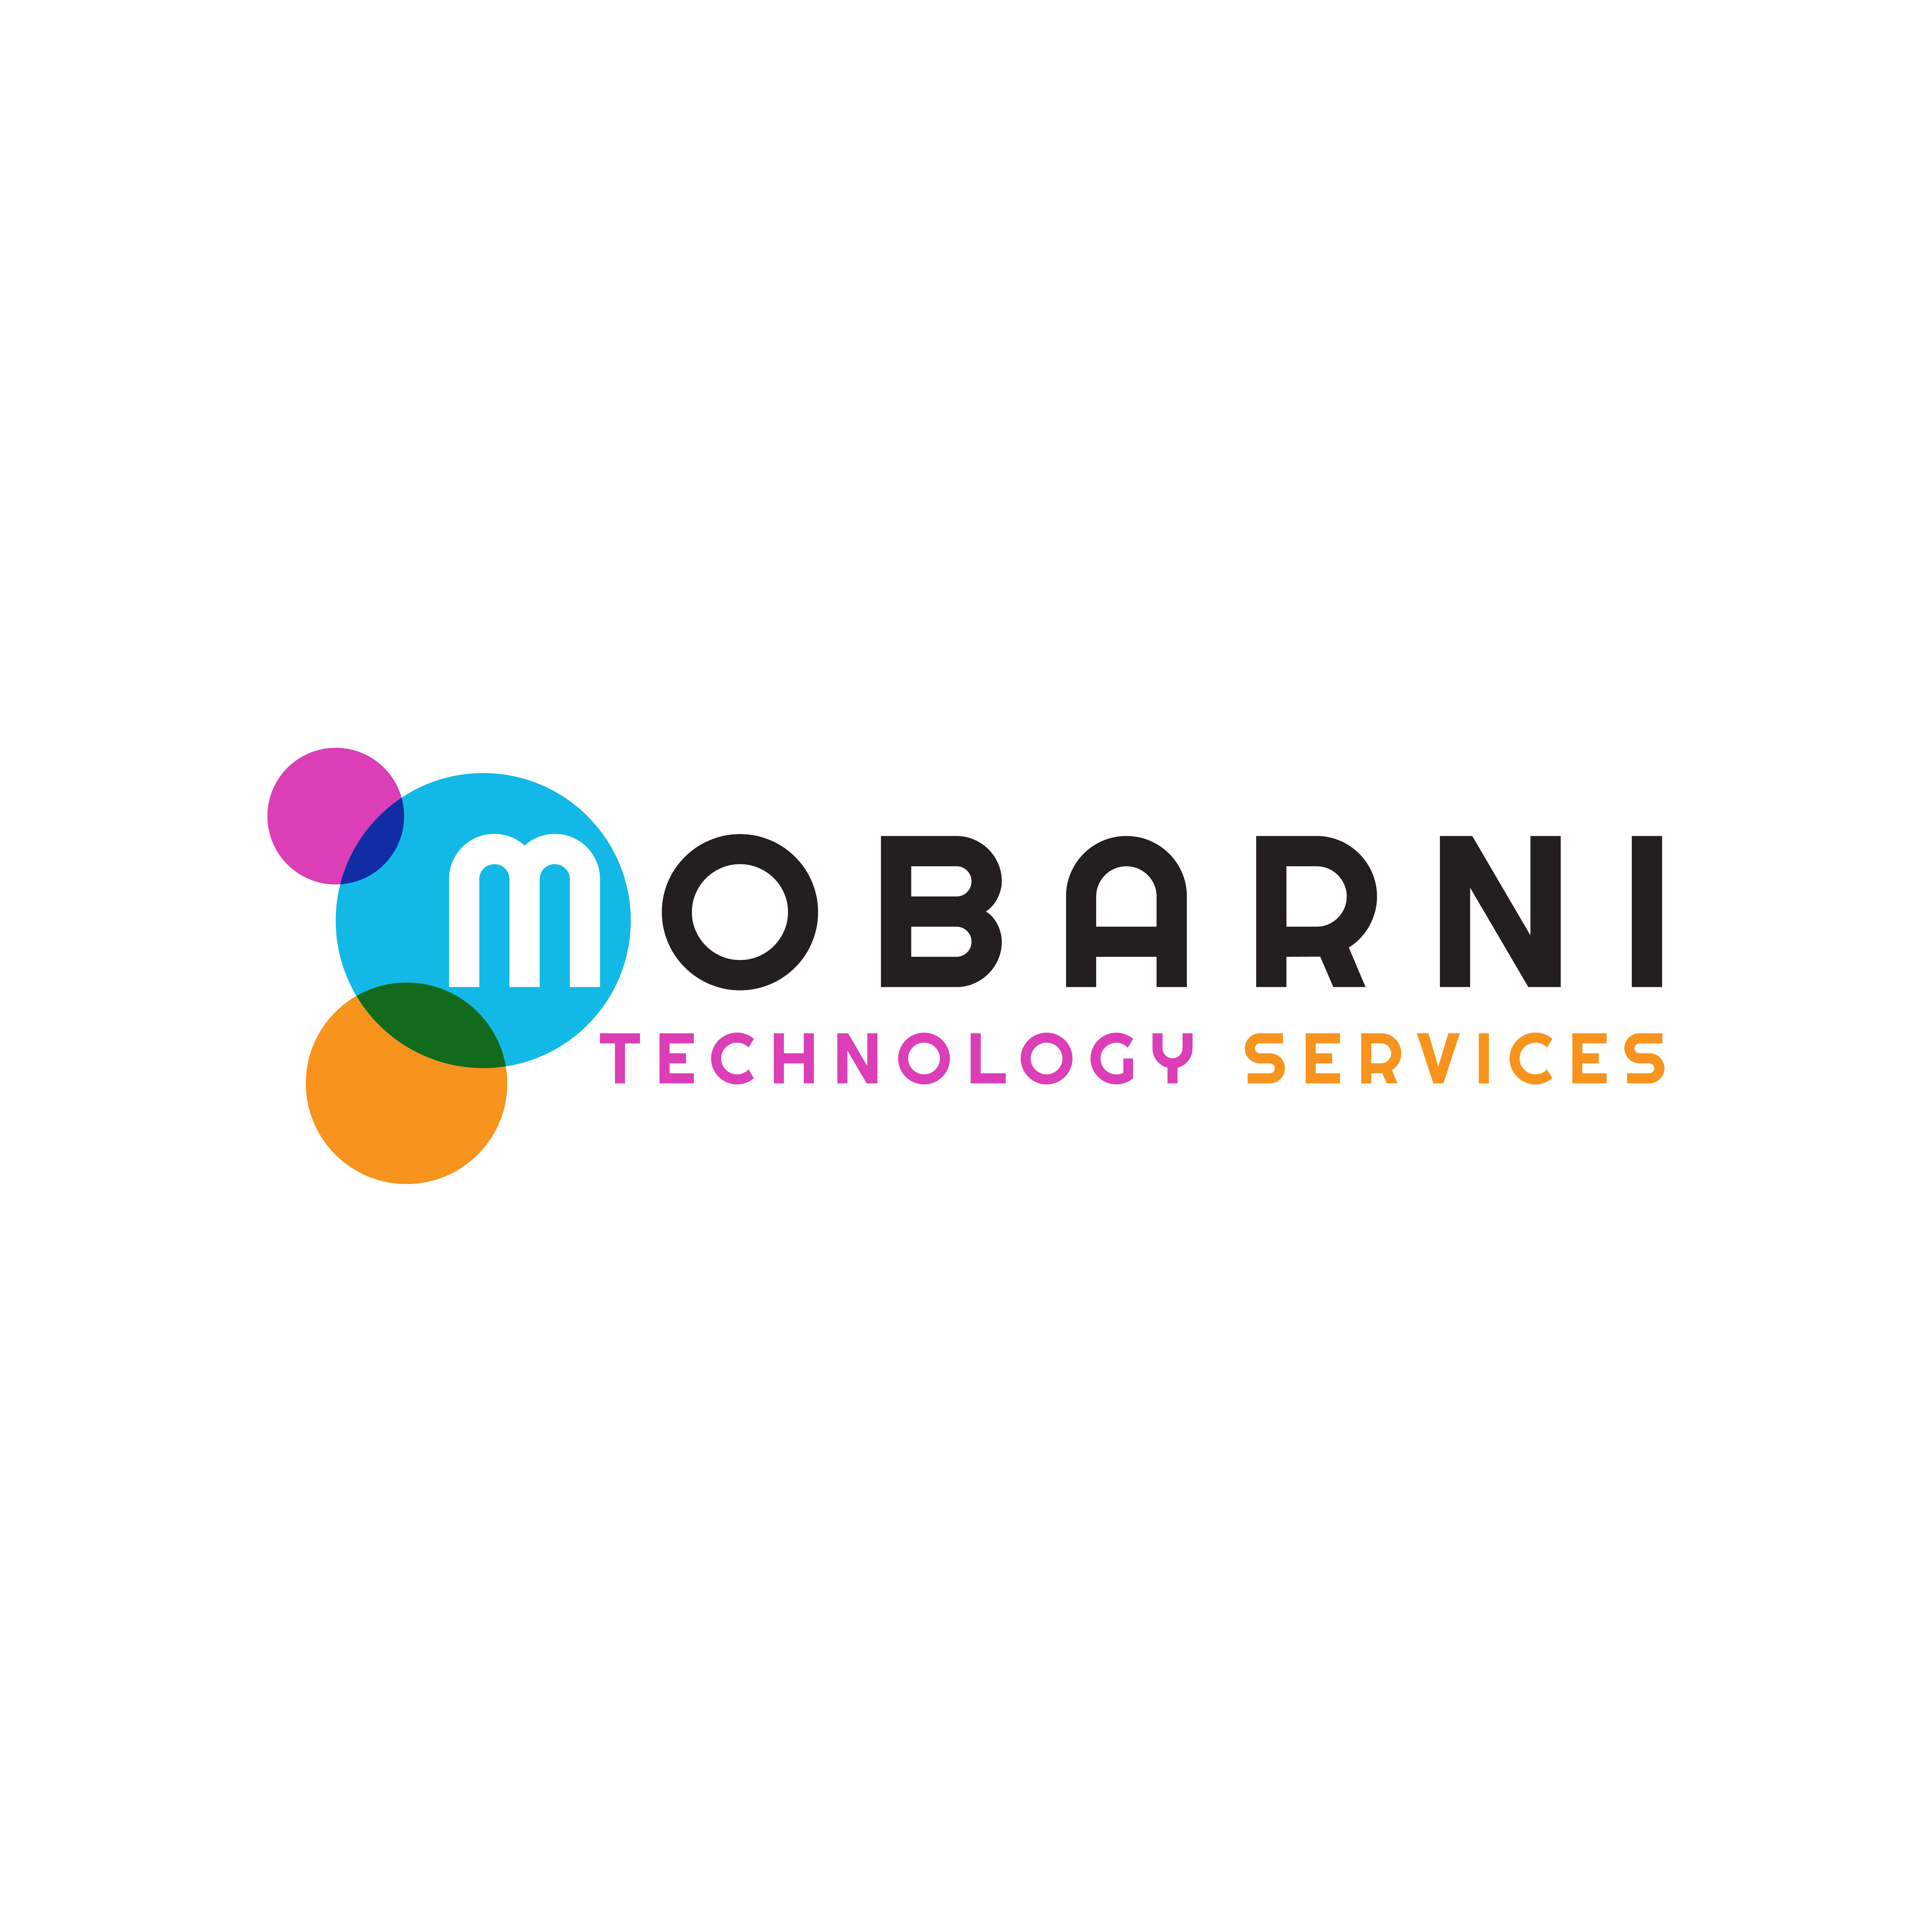 Mobarni Technology Services